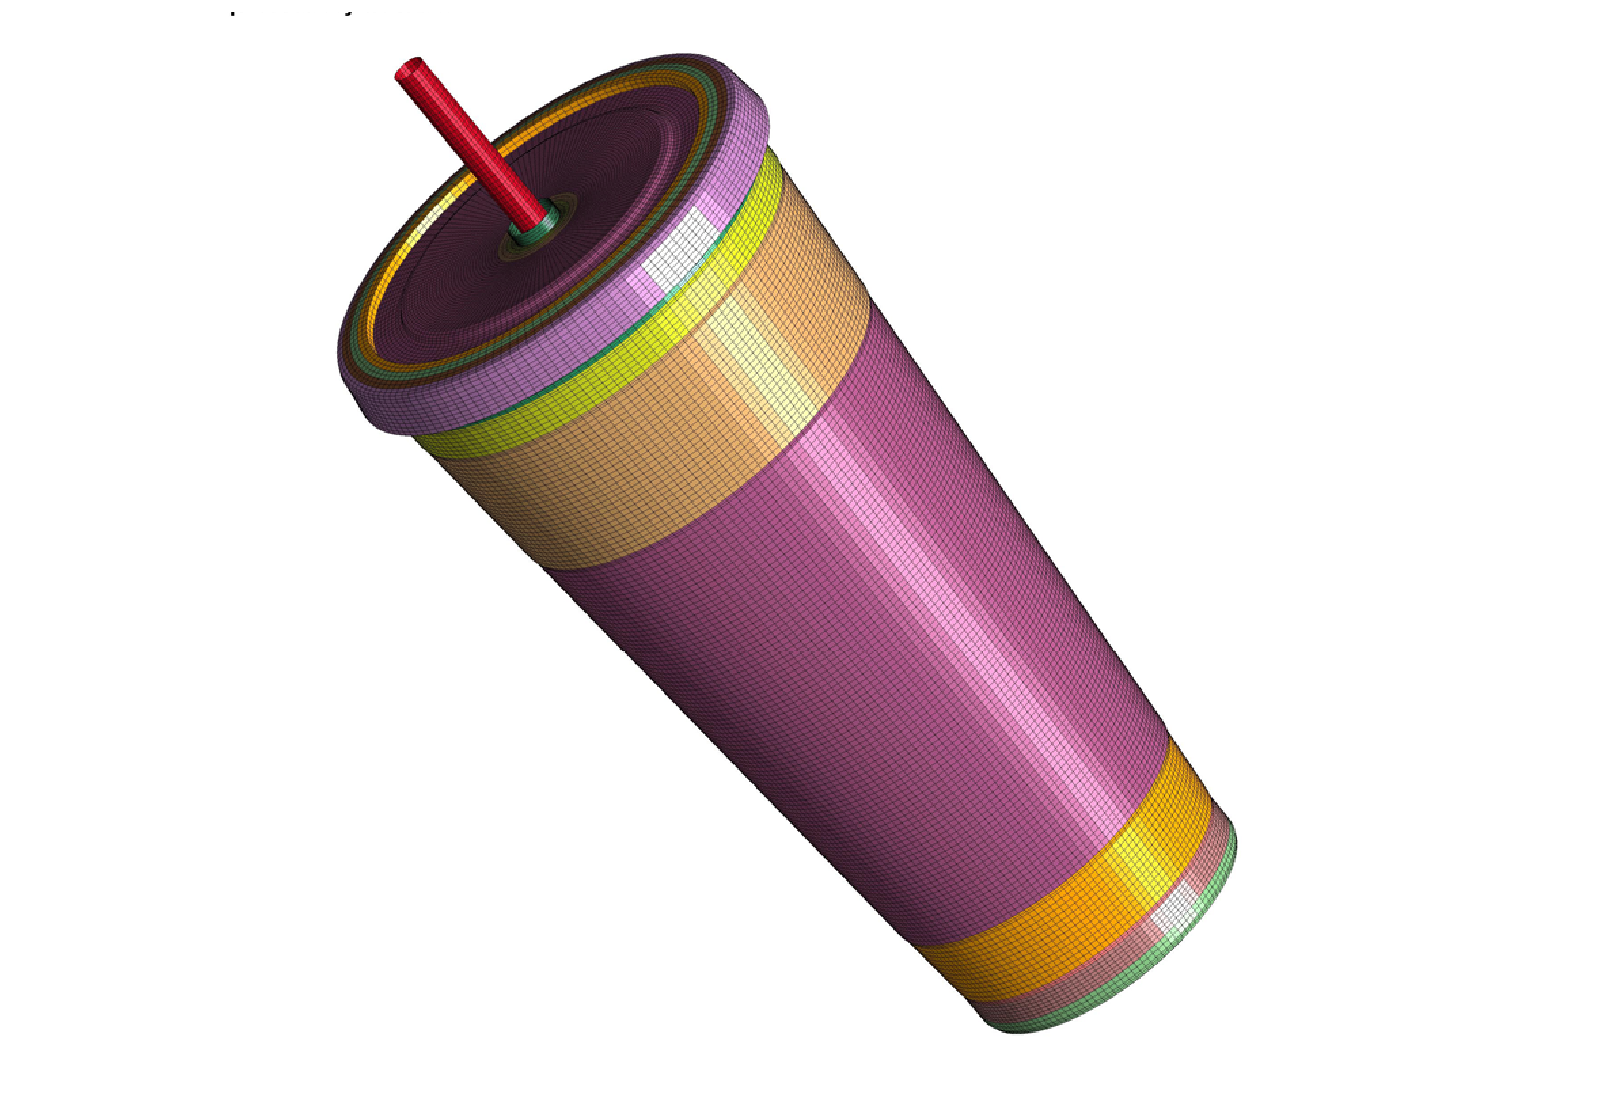 LS-DYNA Drop-Test of Styrene Acrylonitrile (SAN) Plastic Cup